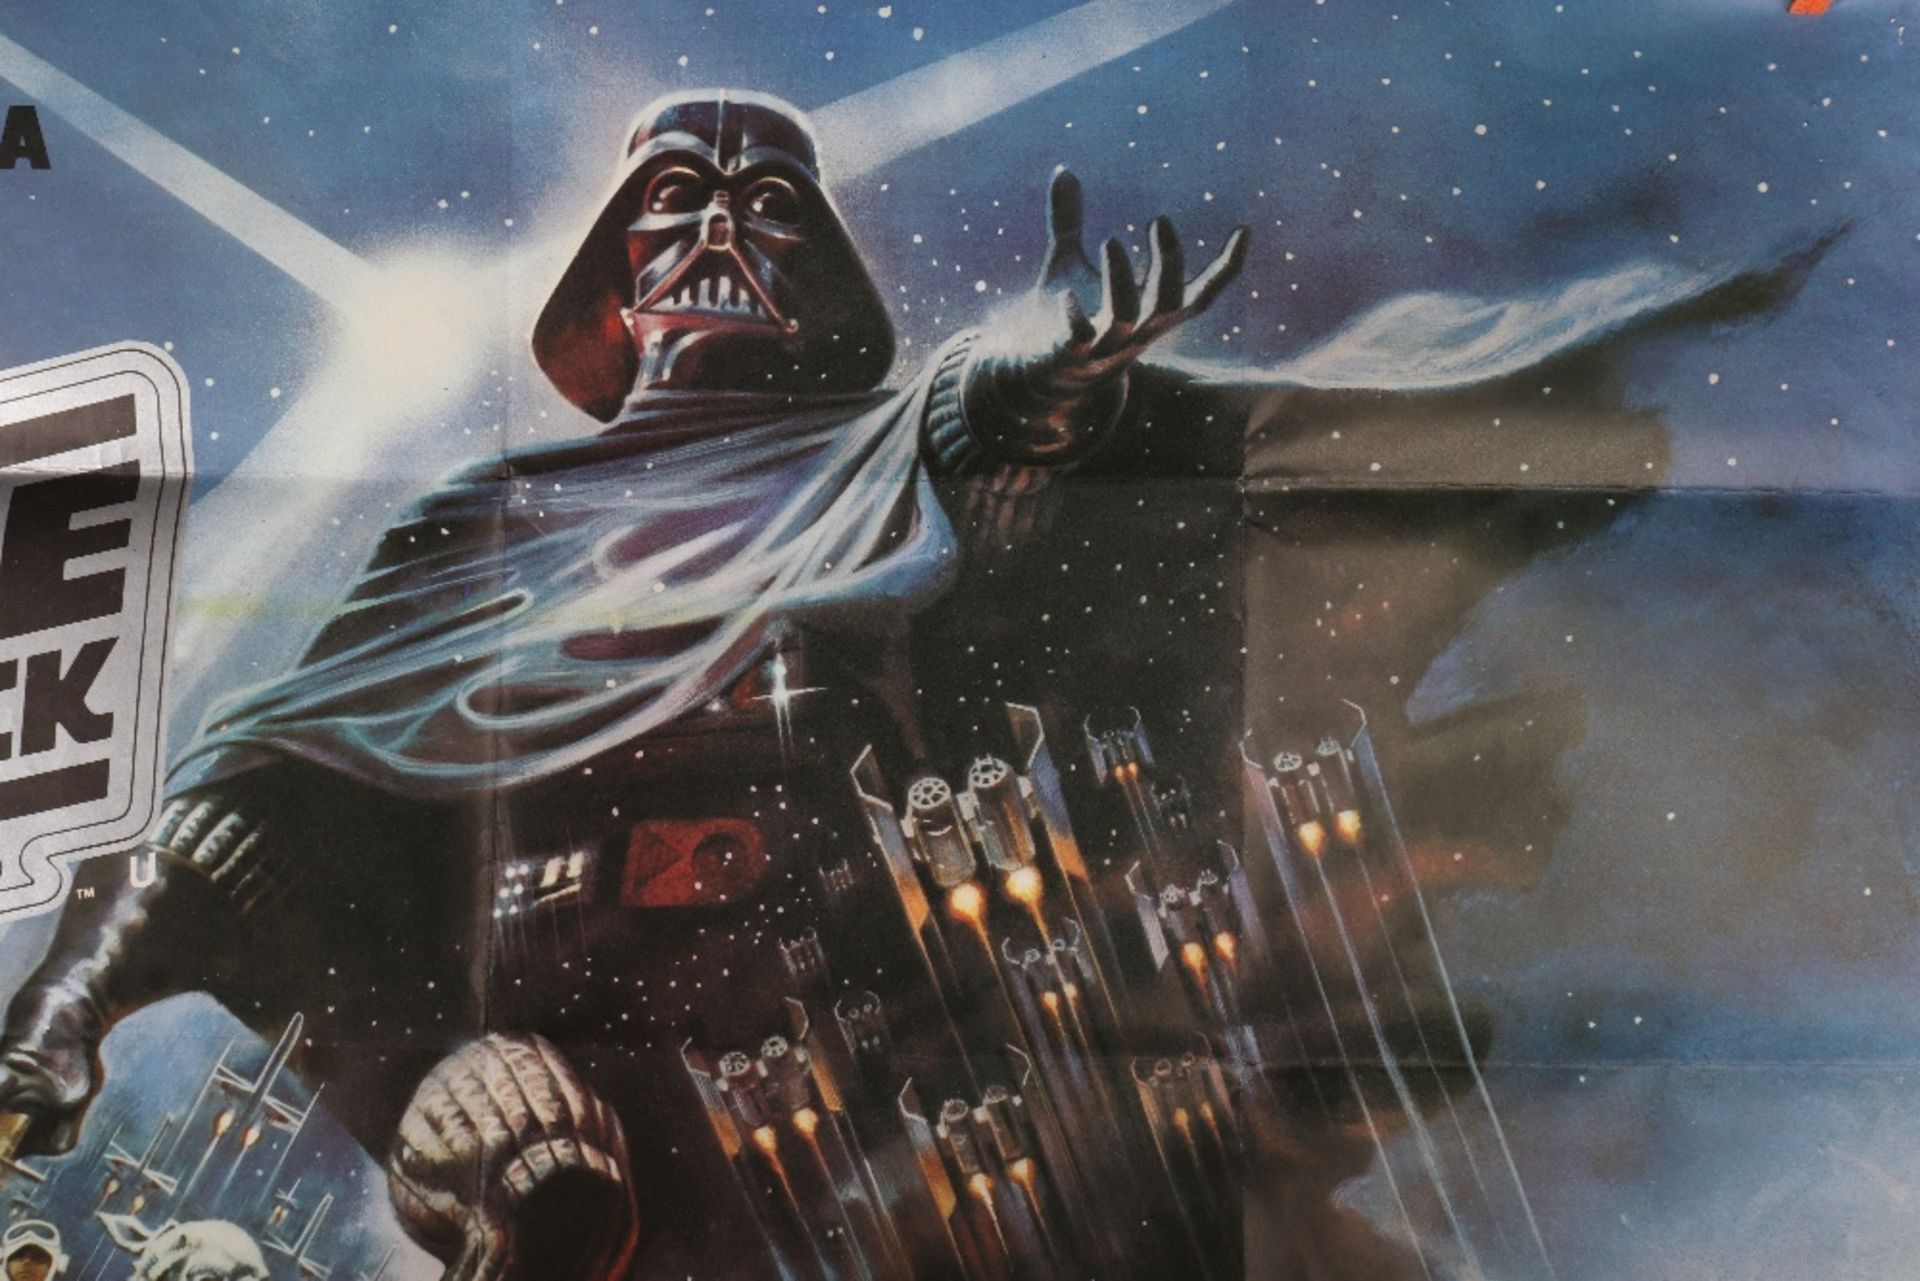 Star Wars The Empire Strikes Back 1980 UK Quad Original Film Poster - Image 6 of 8